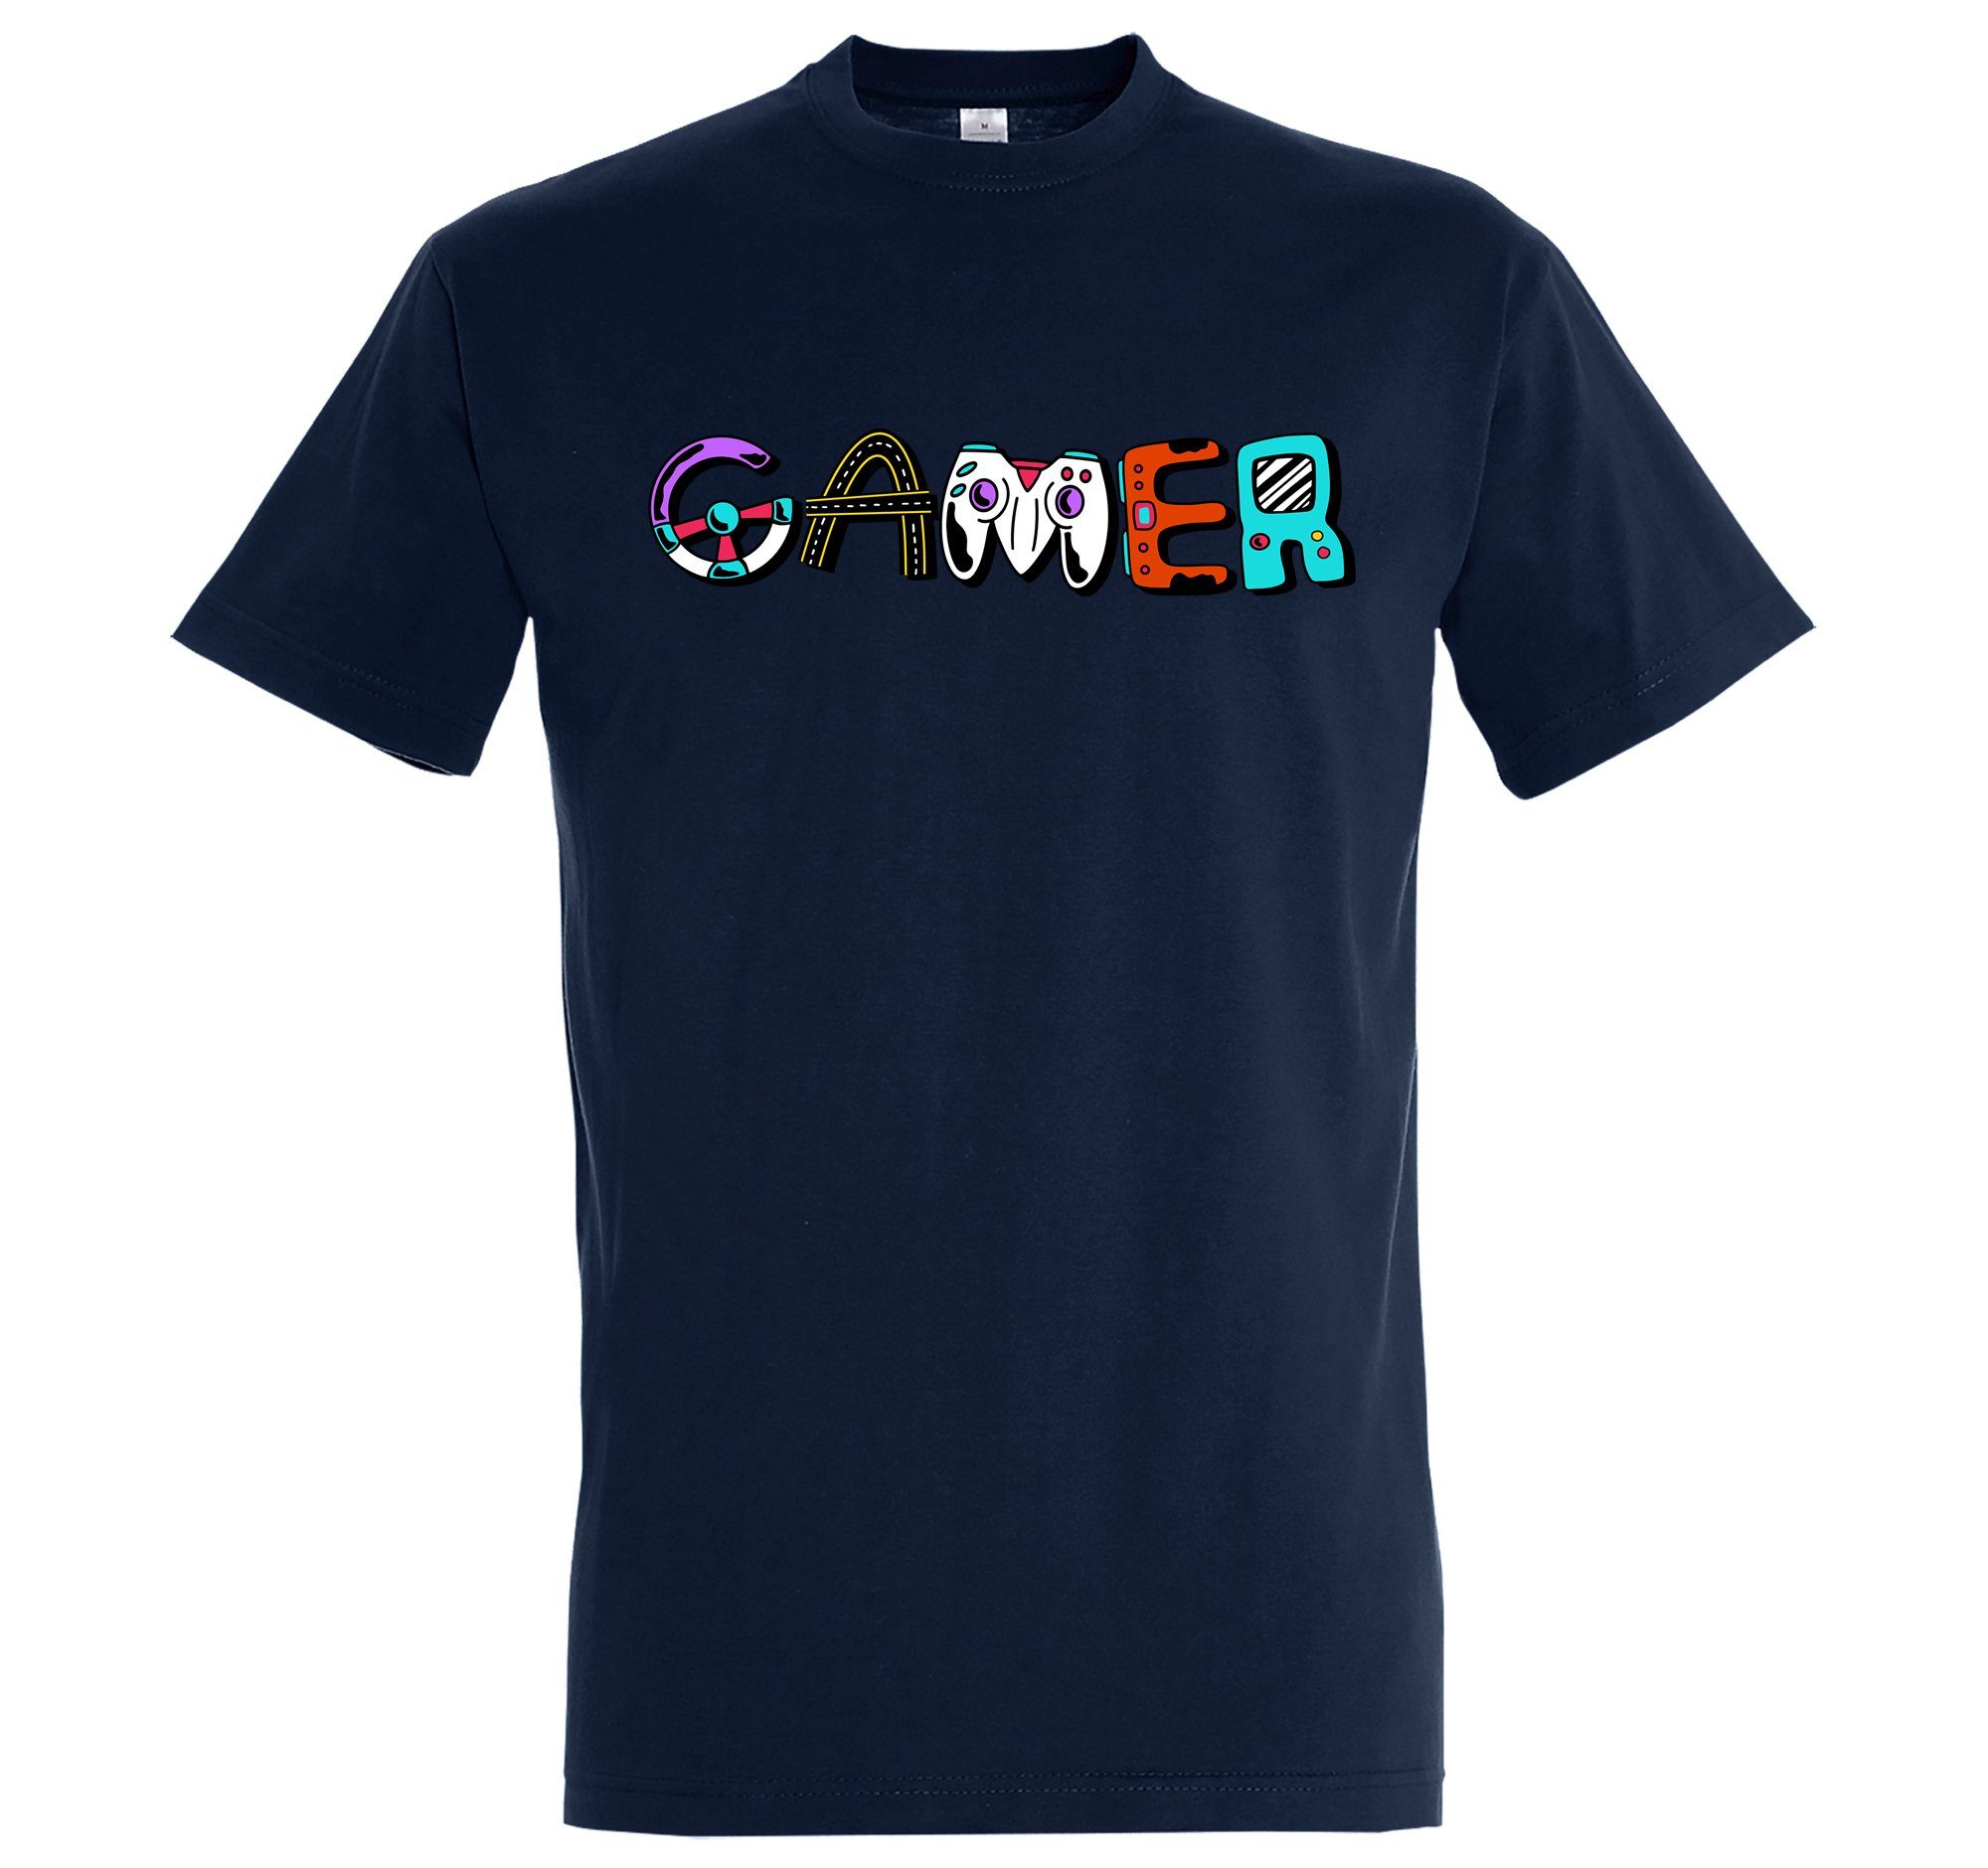 Navyblau Herren T-Shirt Designz mit trendigem Gamer Frontprint Youth Shirt